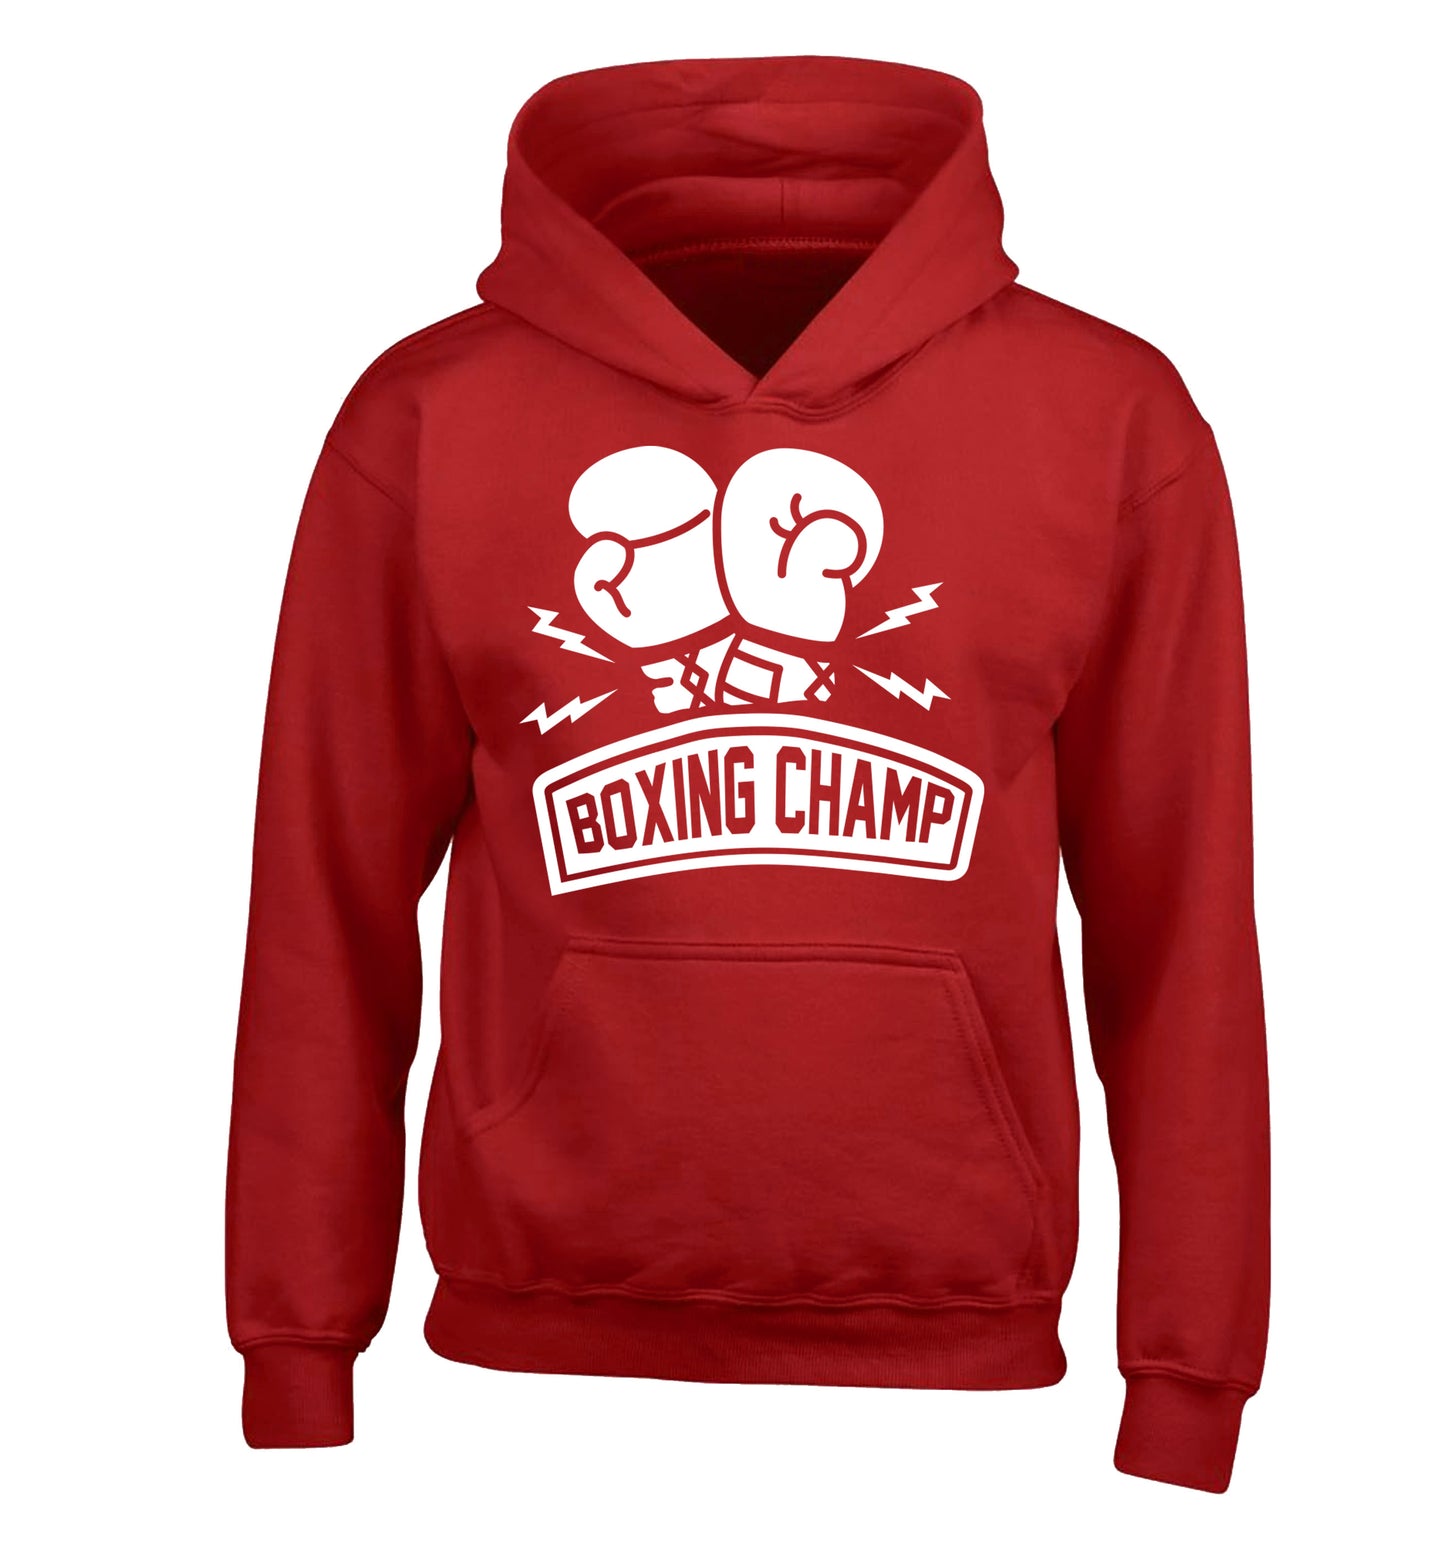 Boxing Champ children's red hoodie 12-13 Years